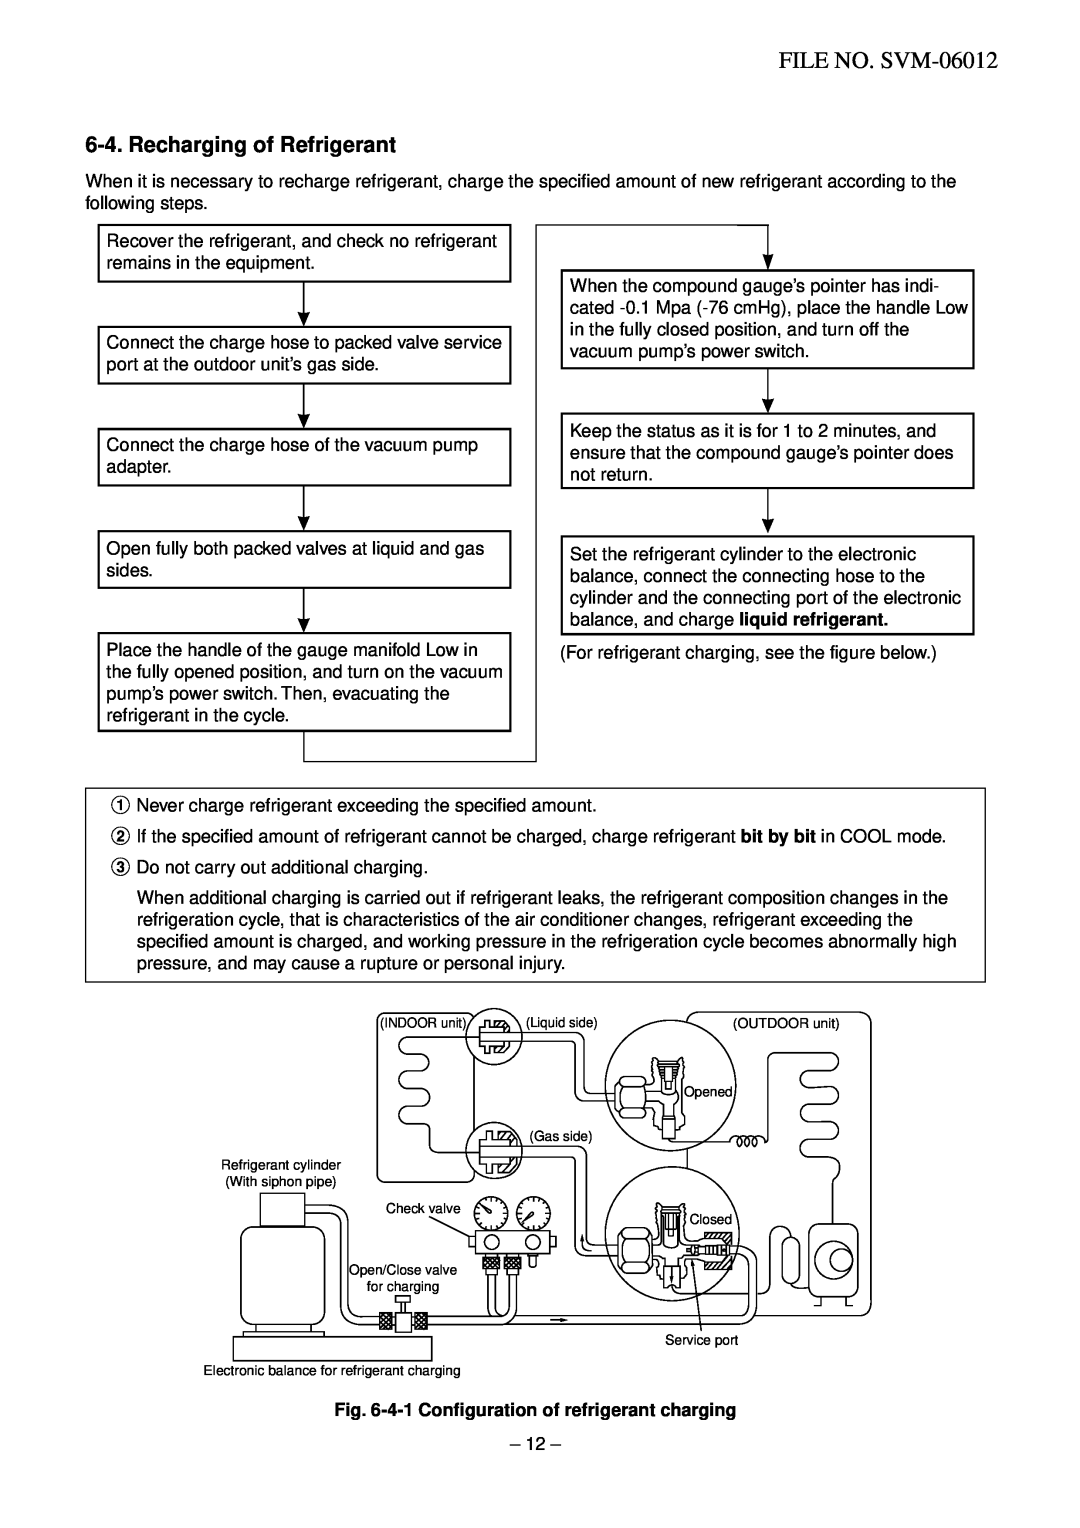 Toshiba RAV-SM562AT-E Recharging of Refrigerant, FILE NO. SVM-06012, 4-1Configuration of refrigerant charging 